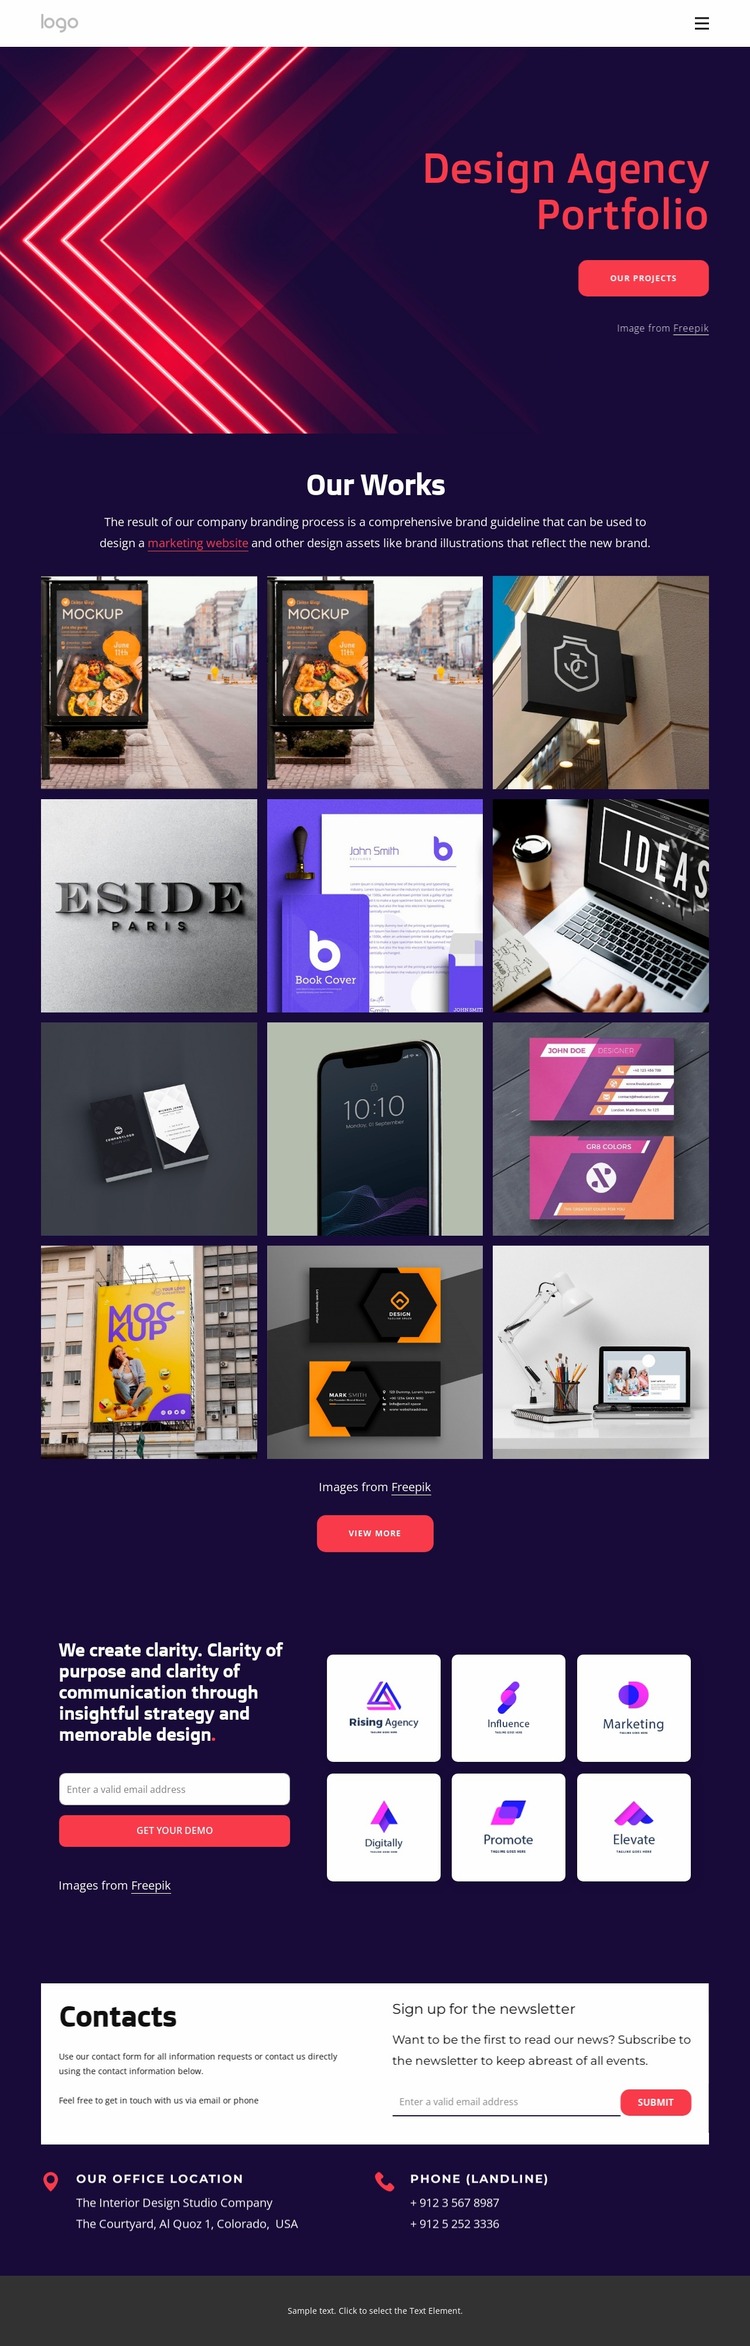 Design agency portfolio Website Mockup